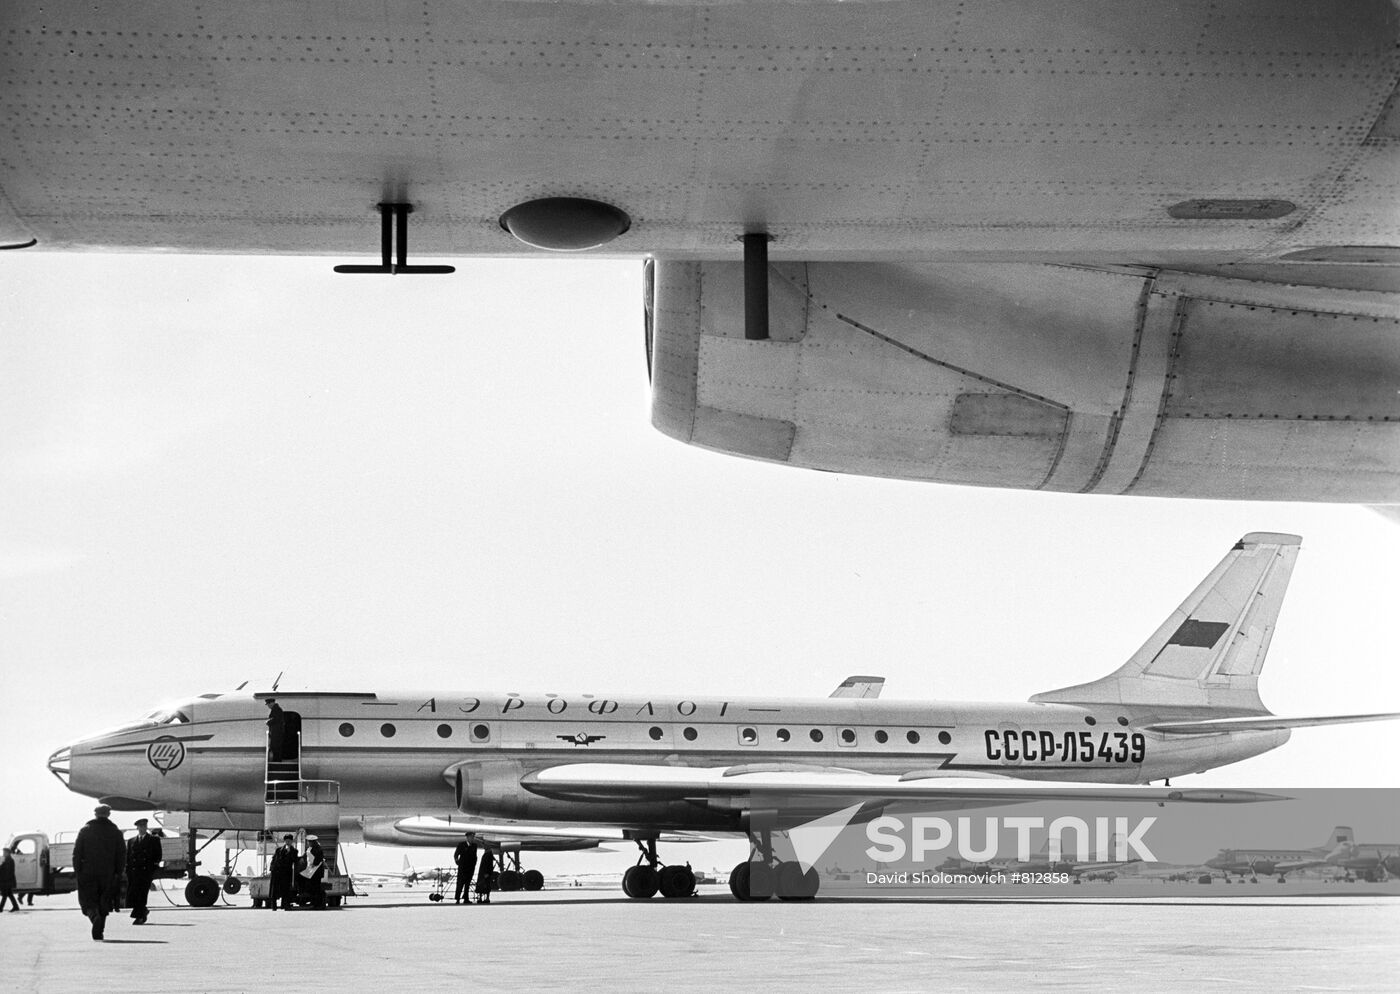 The Soviet-made Tupolev Tu-104 airliner